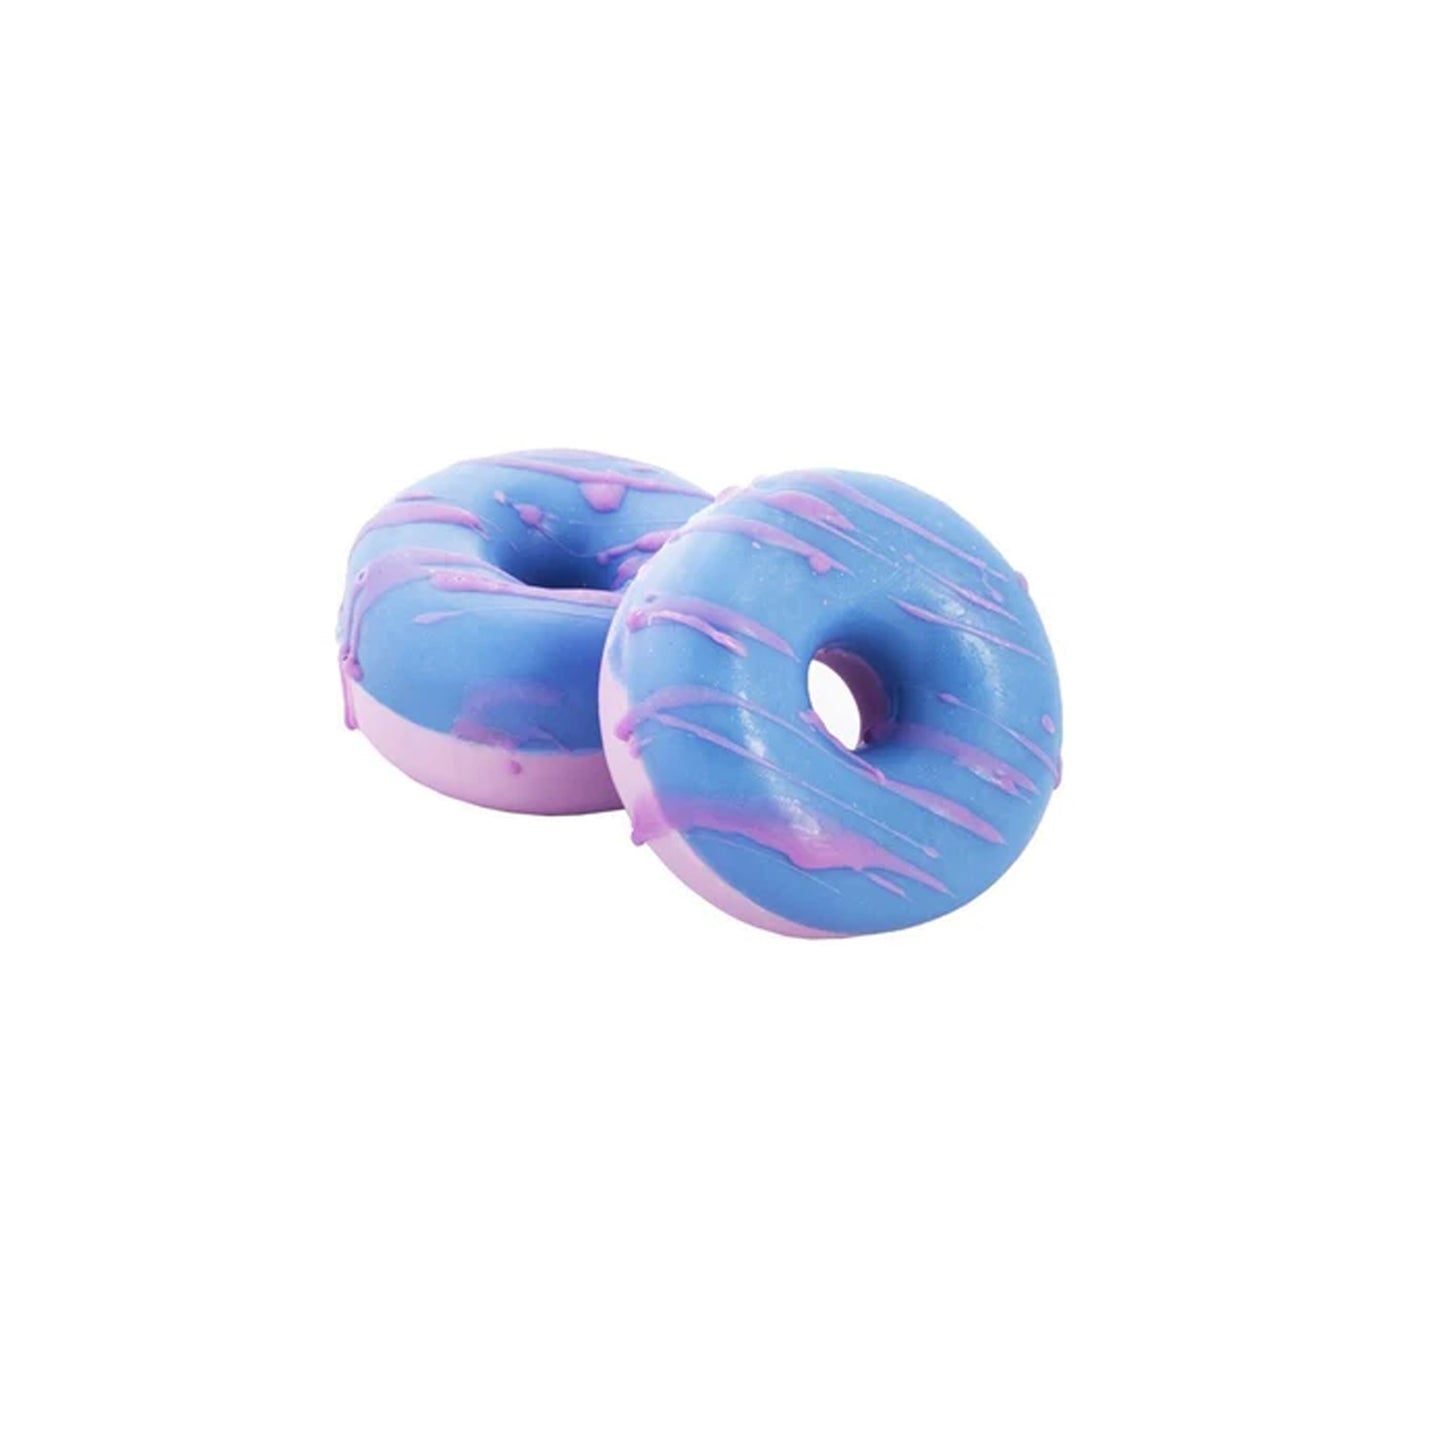 Donut Soap - Blueberry Raspberry